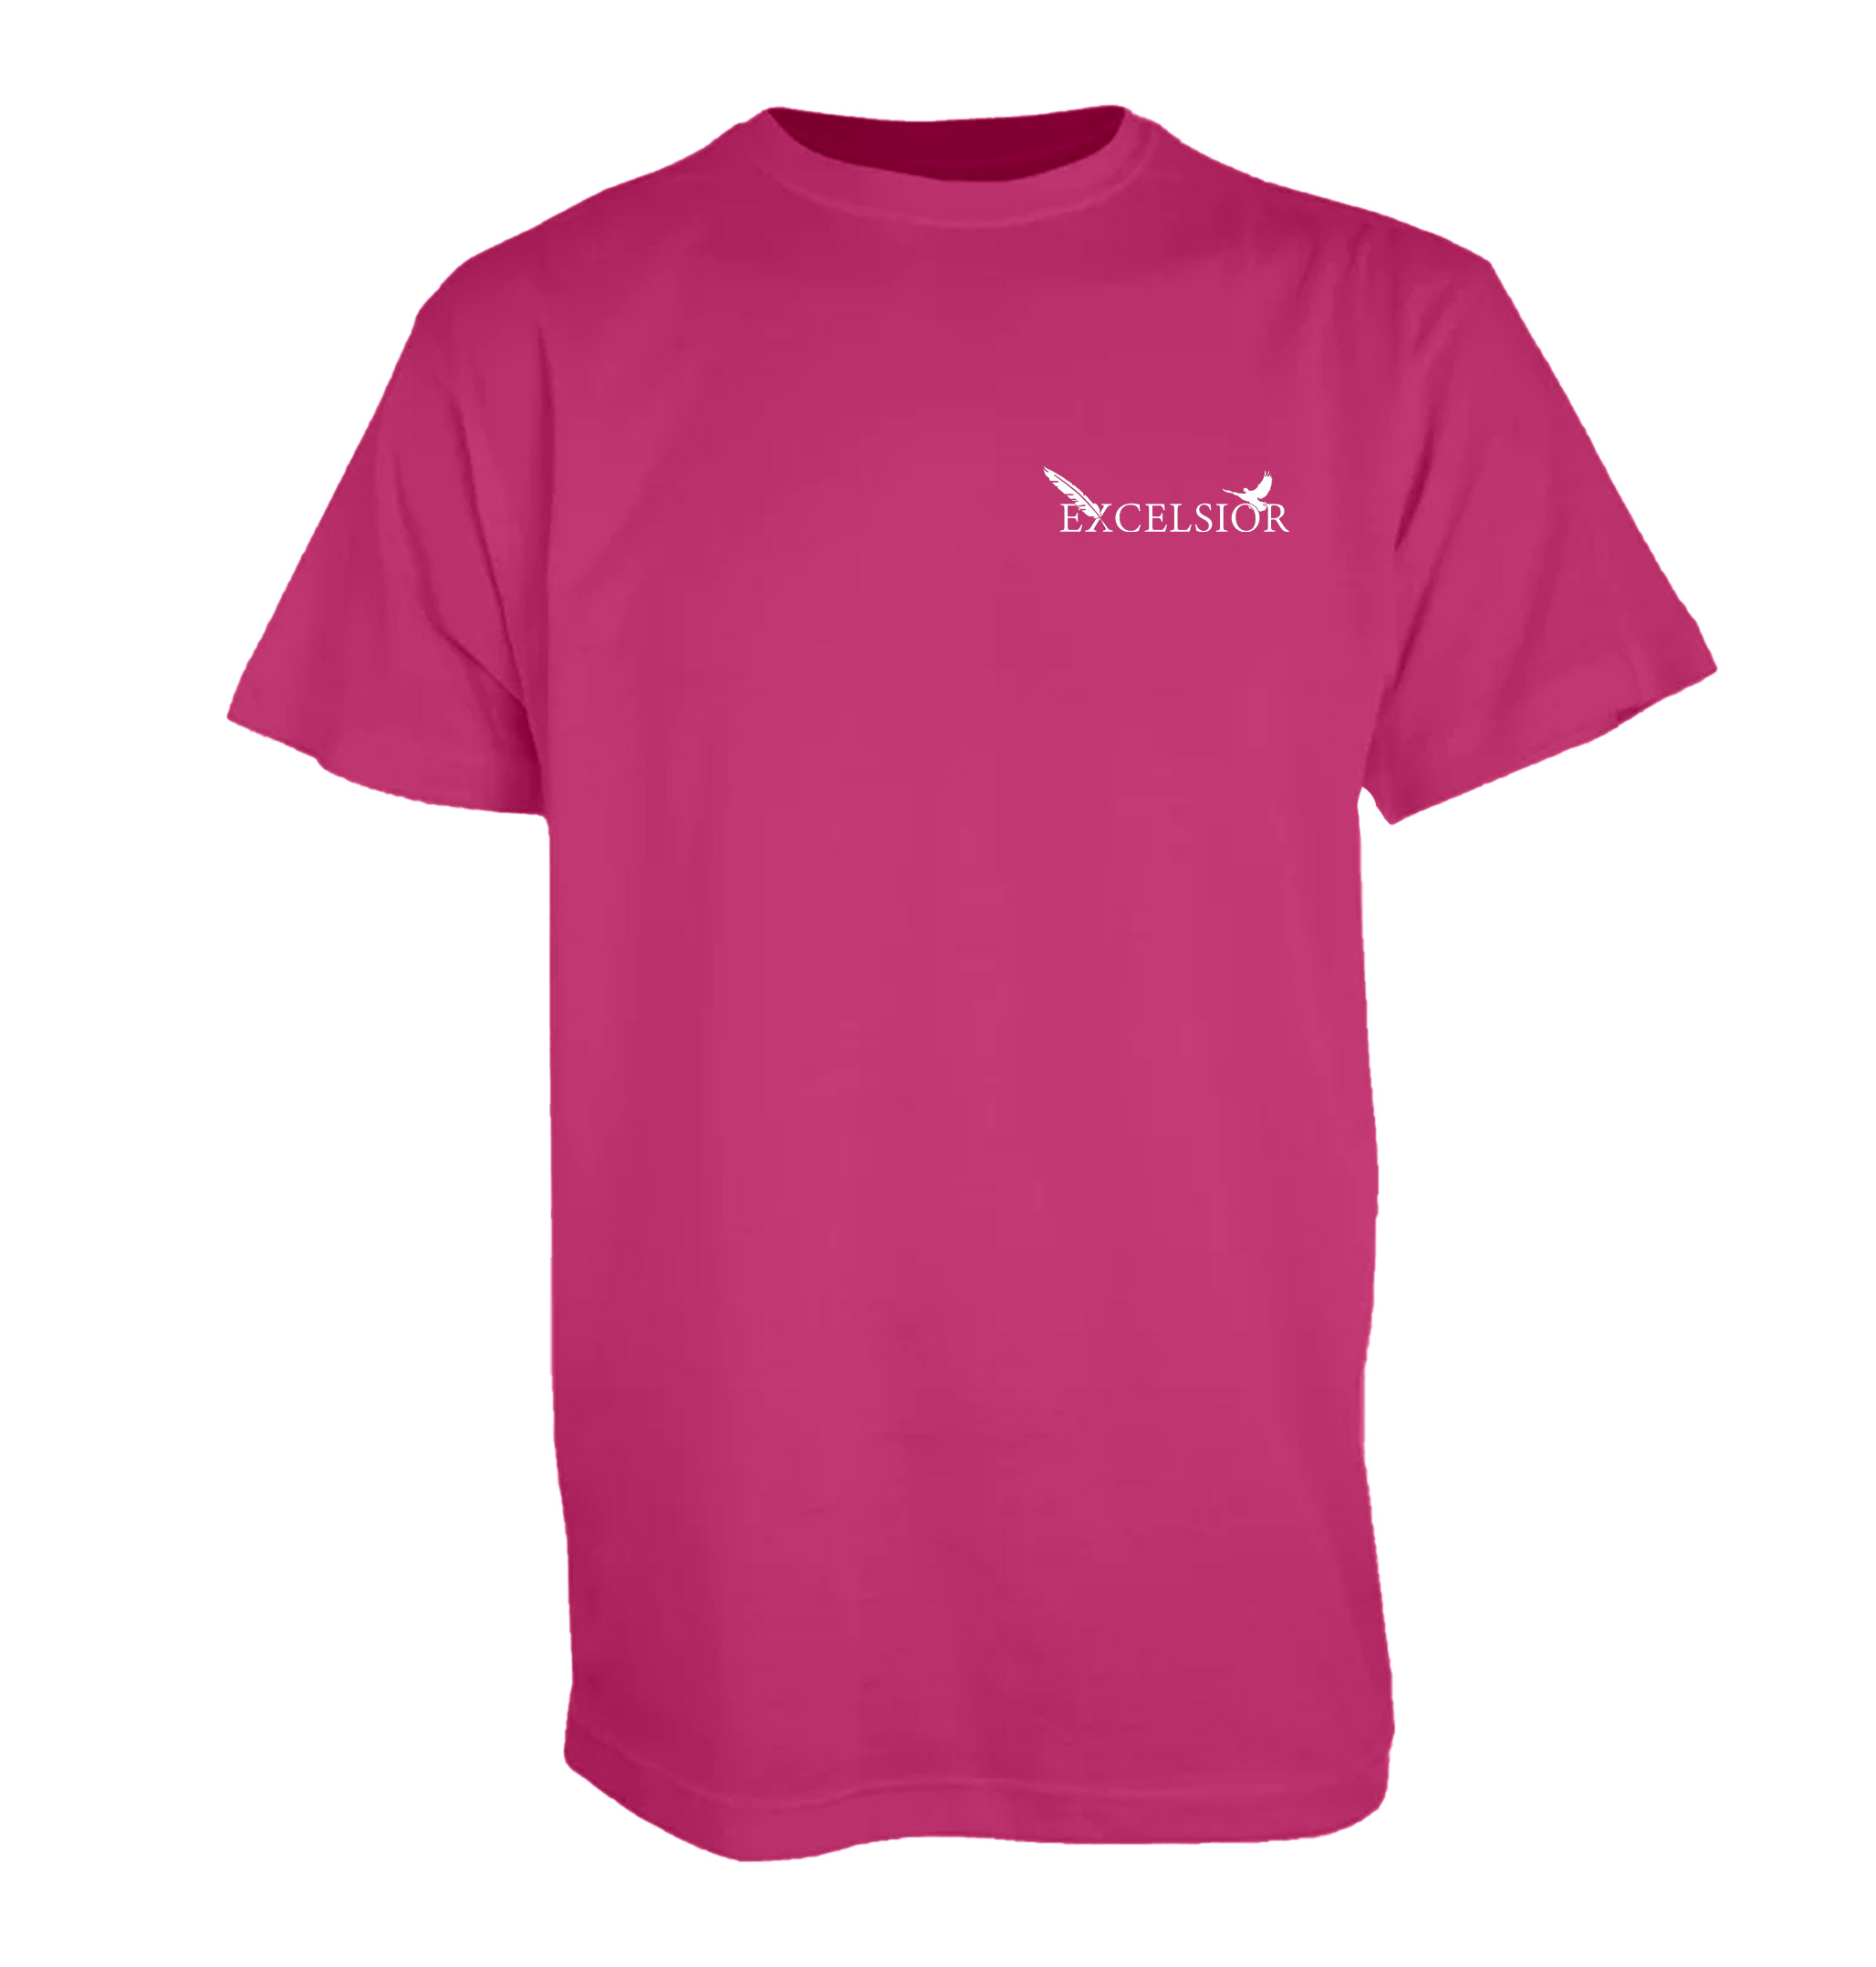 excelsior-crew-neck-t-shirt-hot-pink